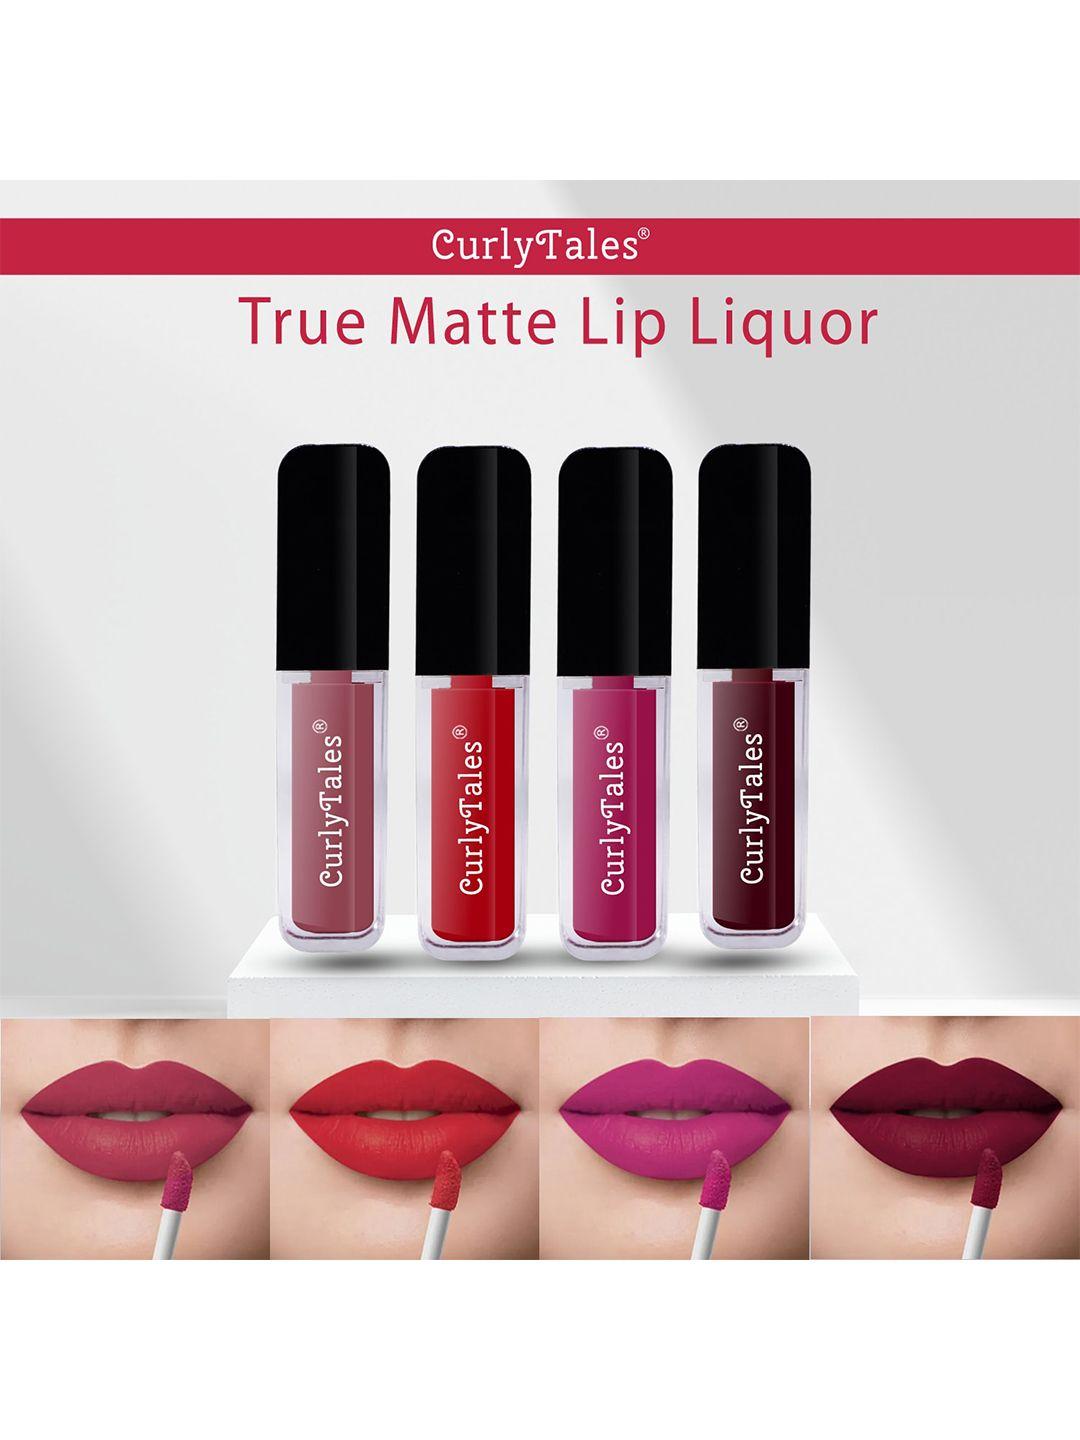 curlytales set of 4 lightweight & waterproof true matte liquid lipstick - 09, 11, 12, 13